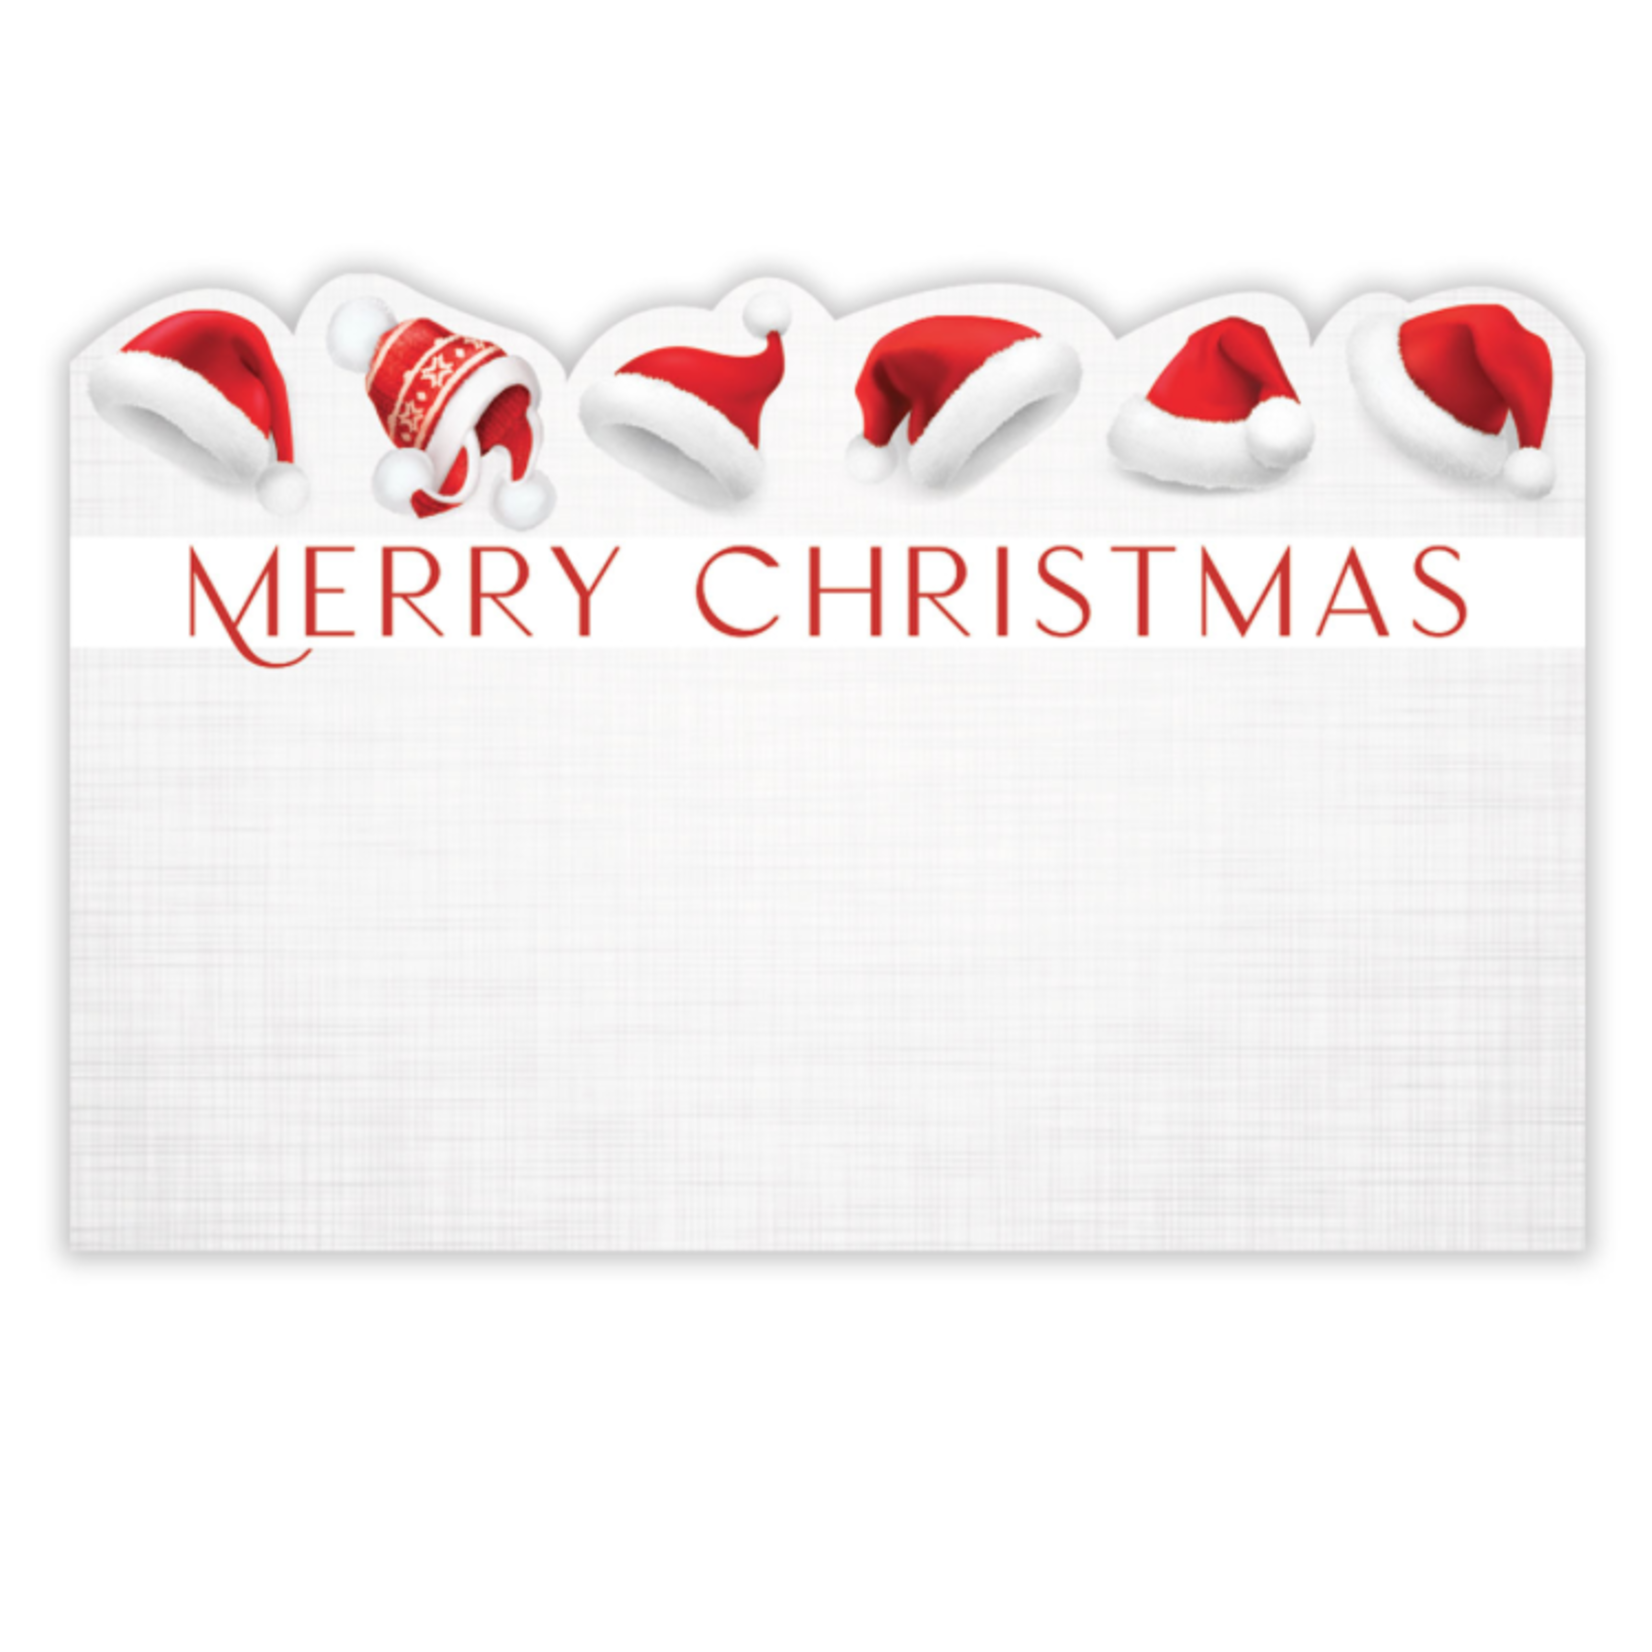 "MERRY CHRISTMAS" CAPRI CARD, SANTA HATS